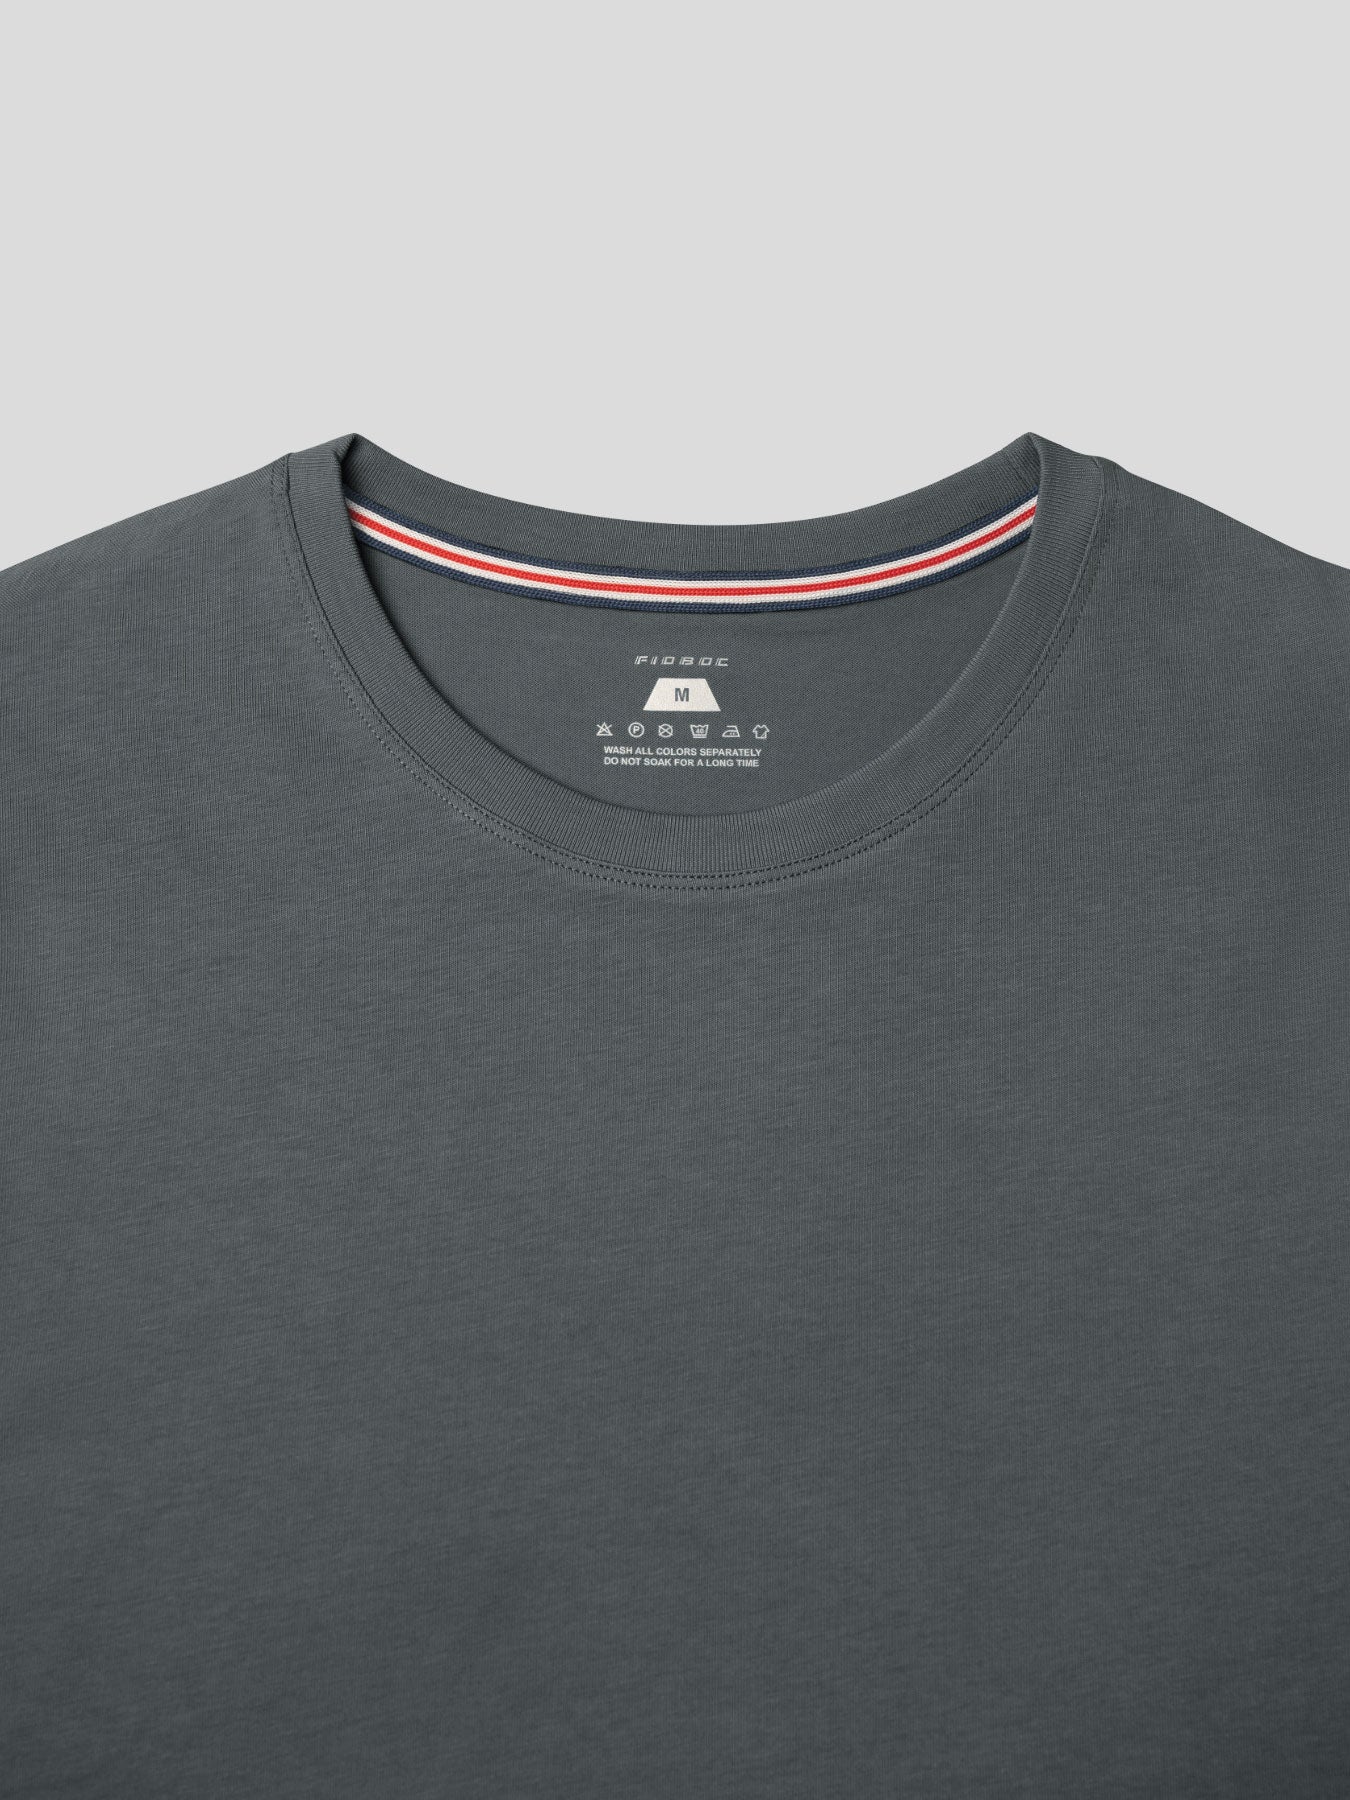 StayCool 2.0 Curve-Hem T-Shirt: Klassische Passform